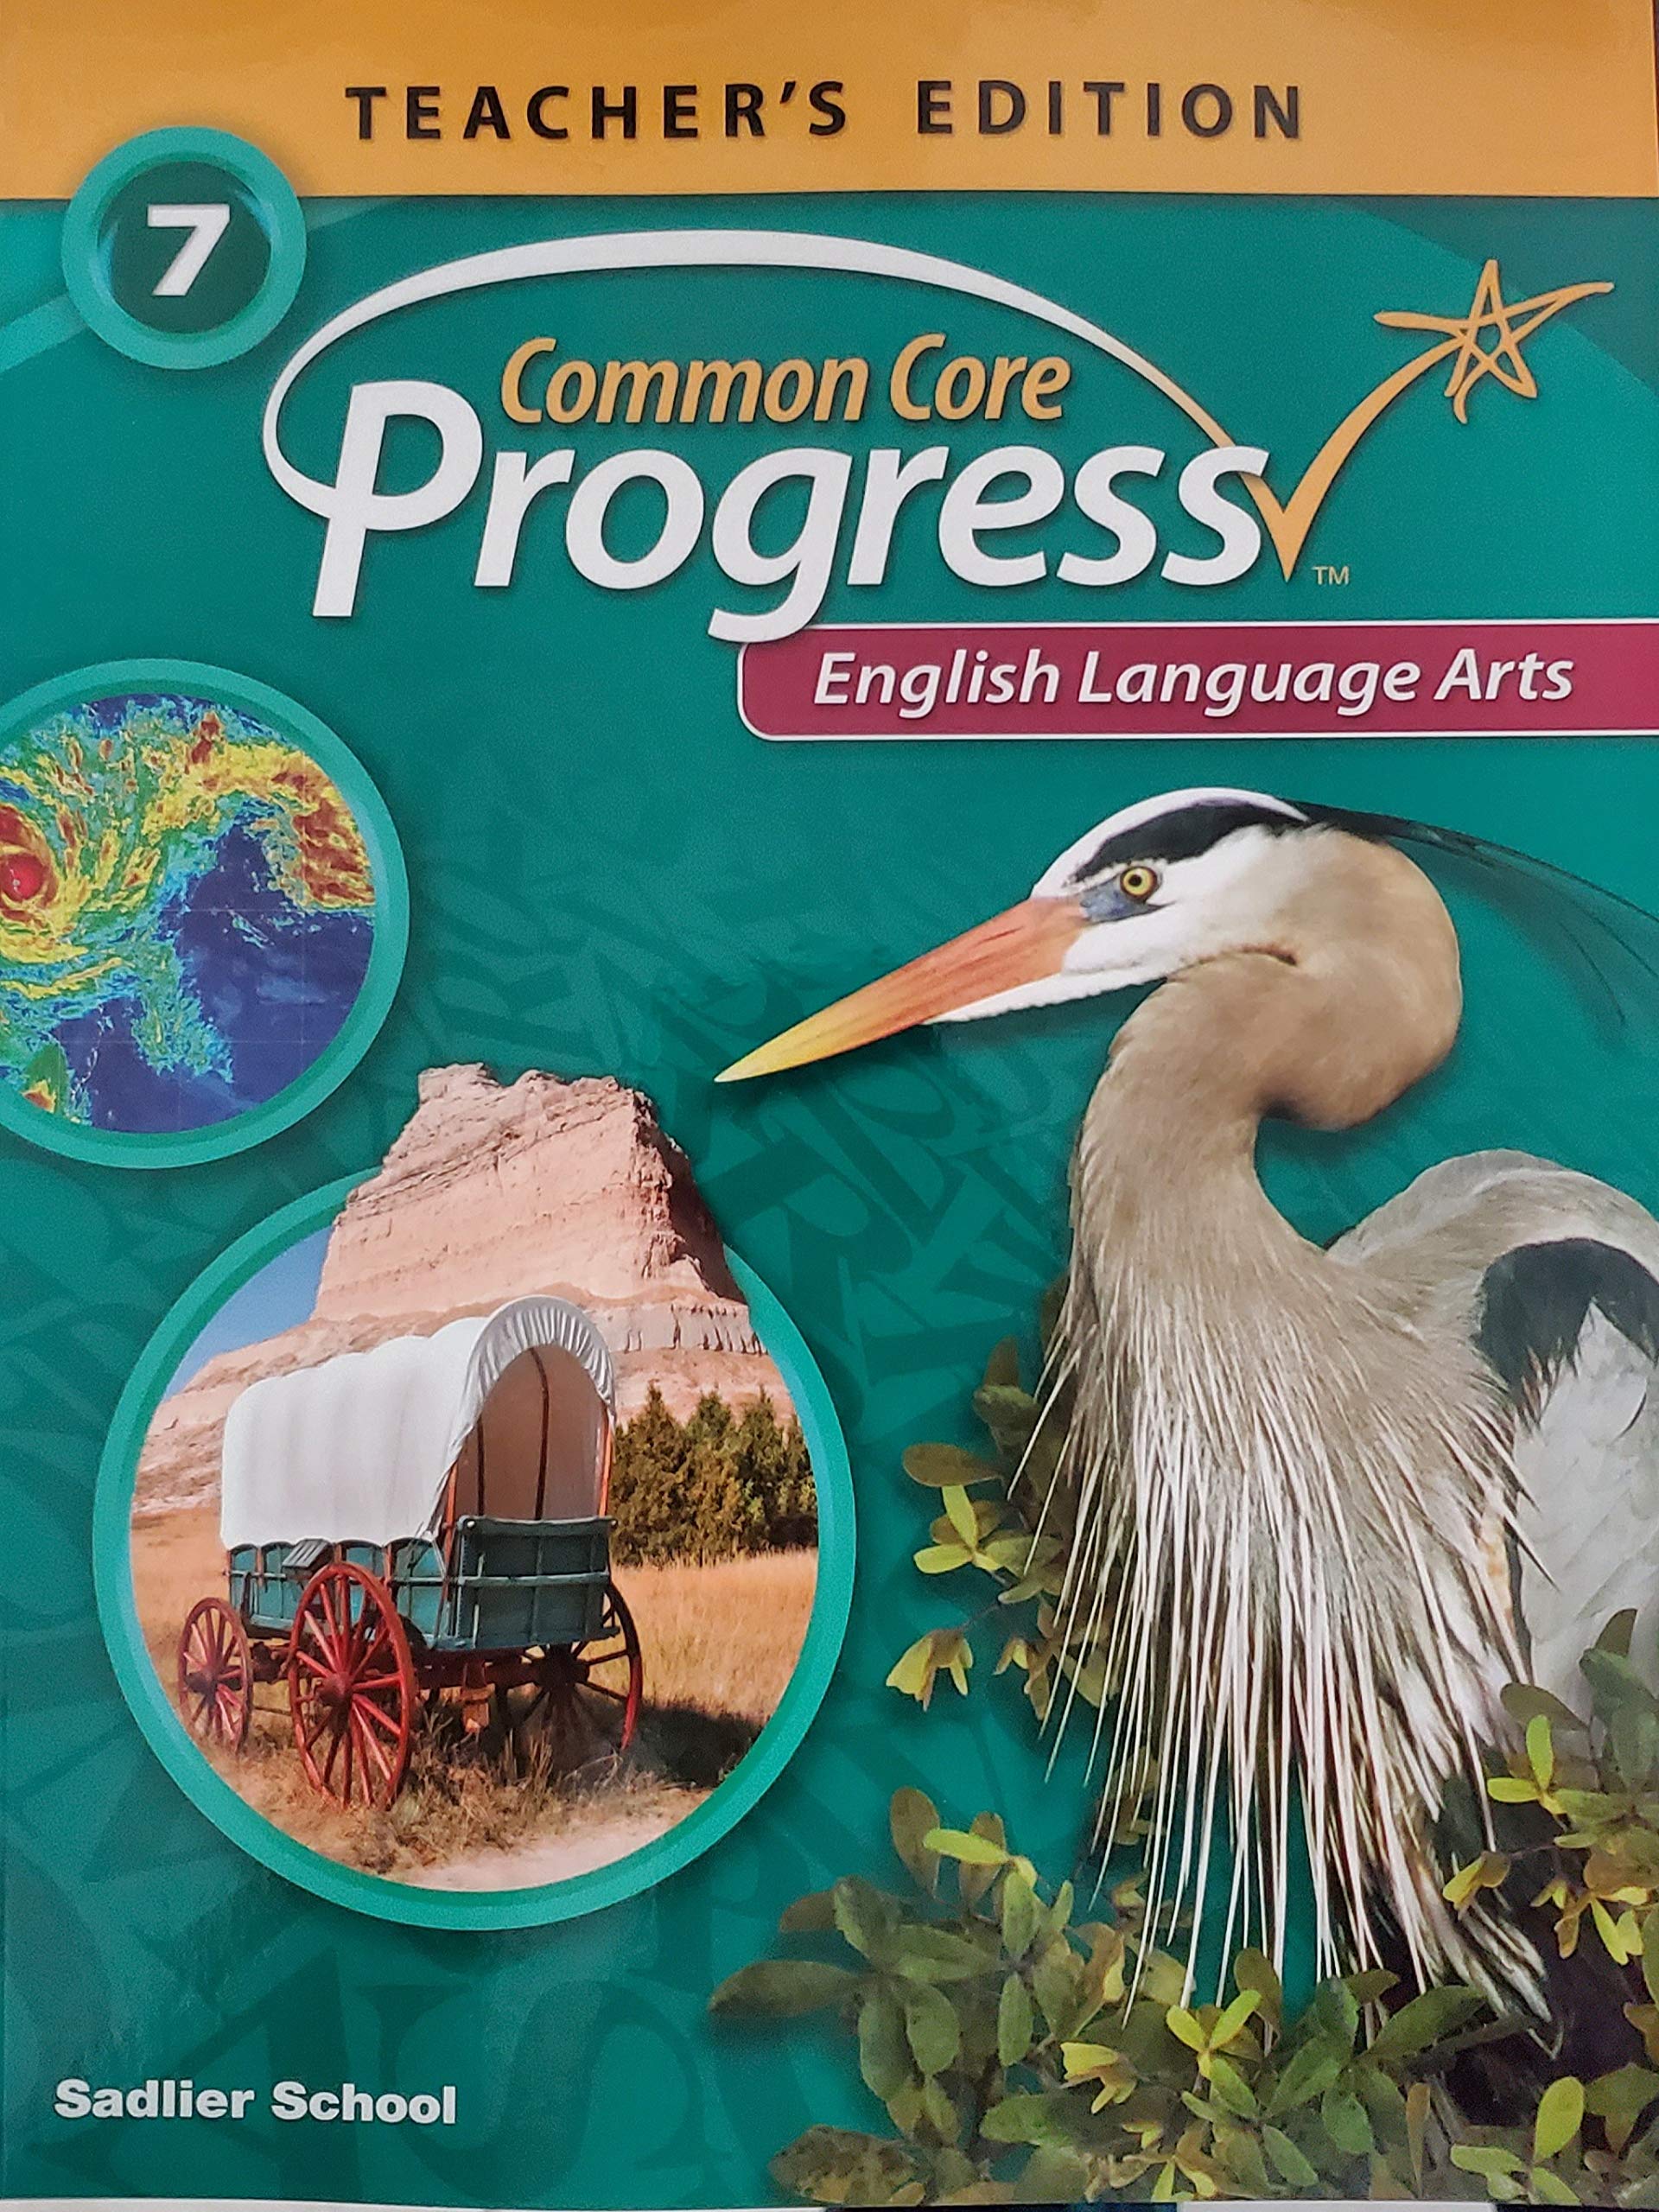 Progress Language Arts G-7 Teachers Guide (Paperback)